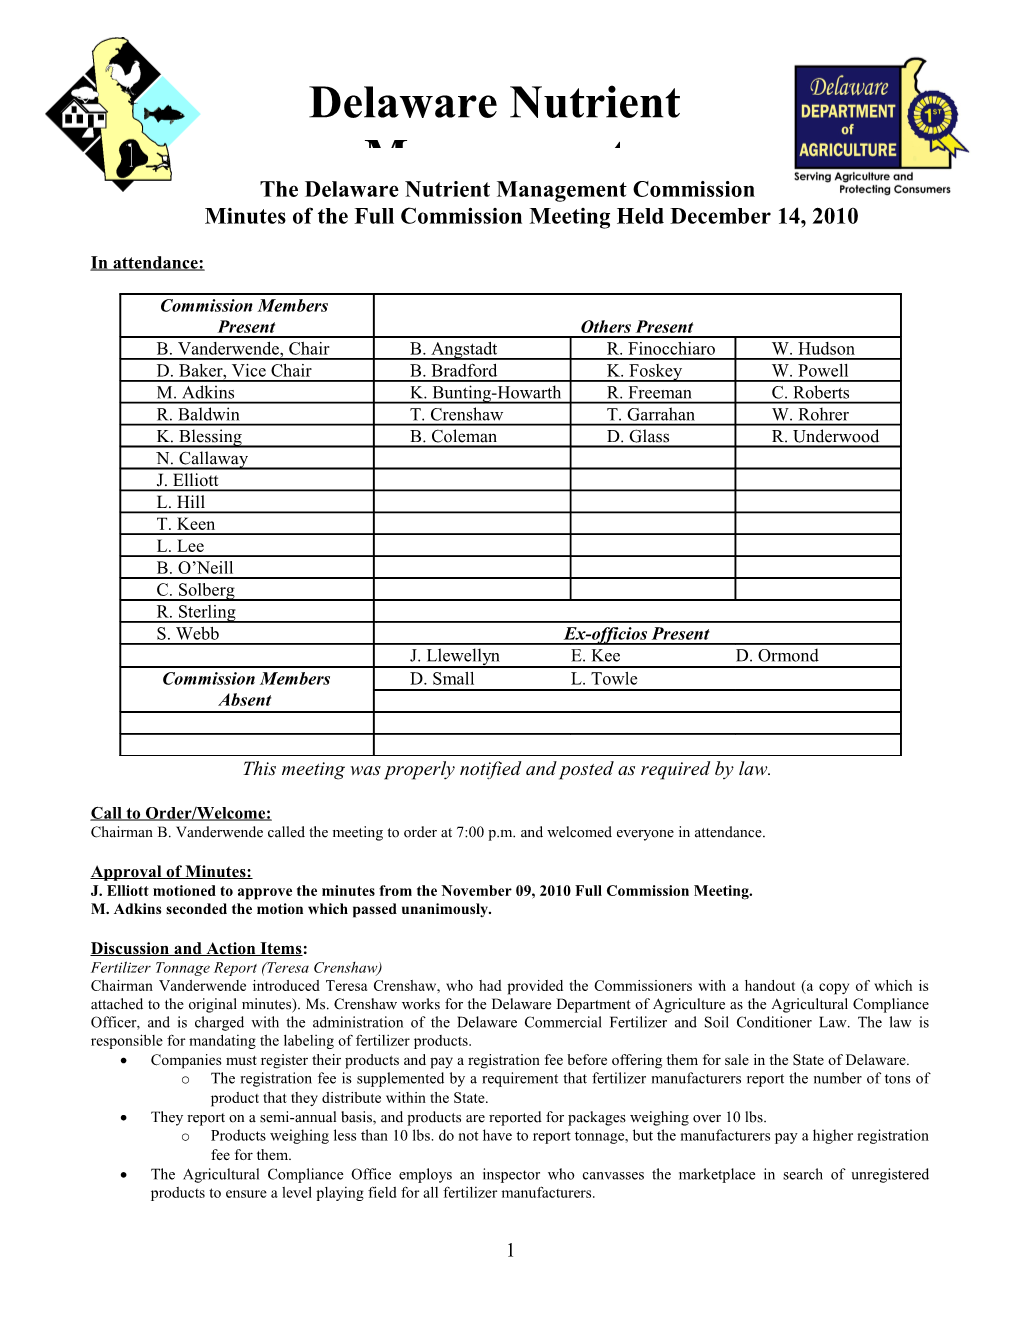 The Delaware Nutrient Management Commission